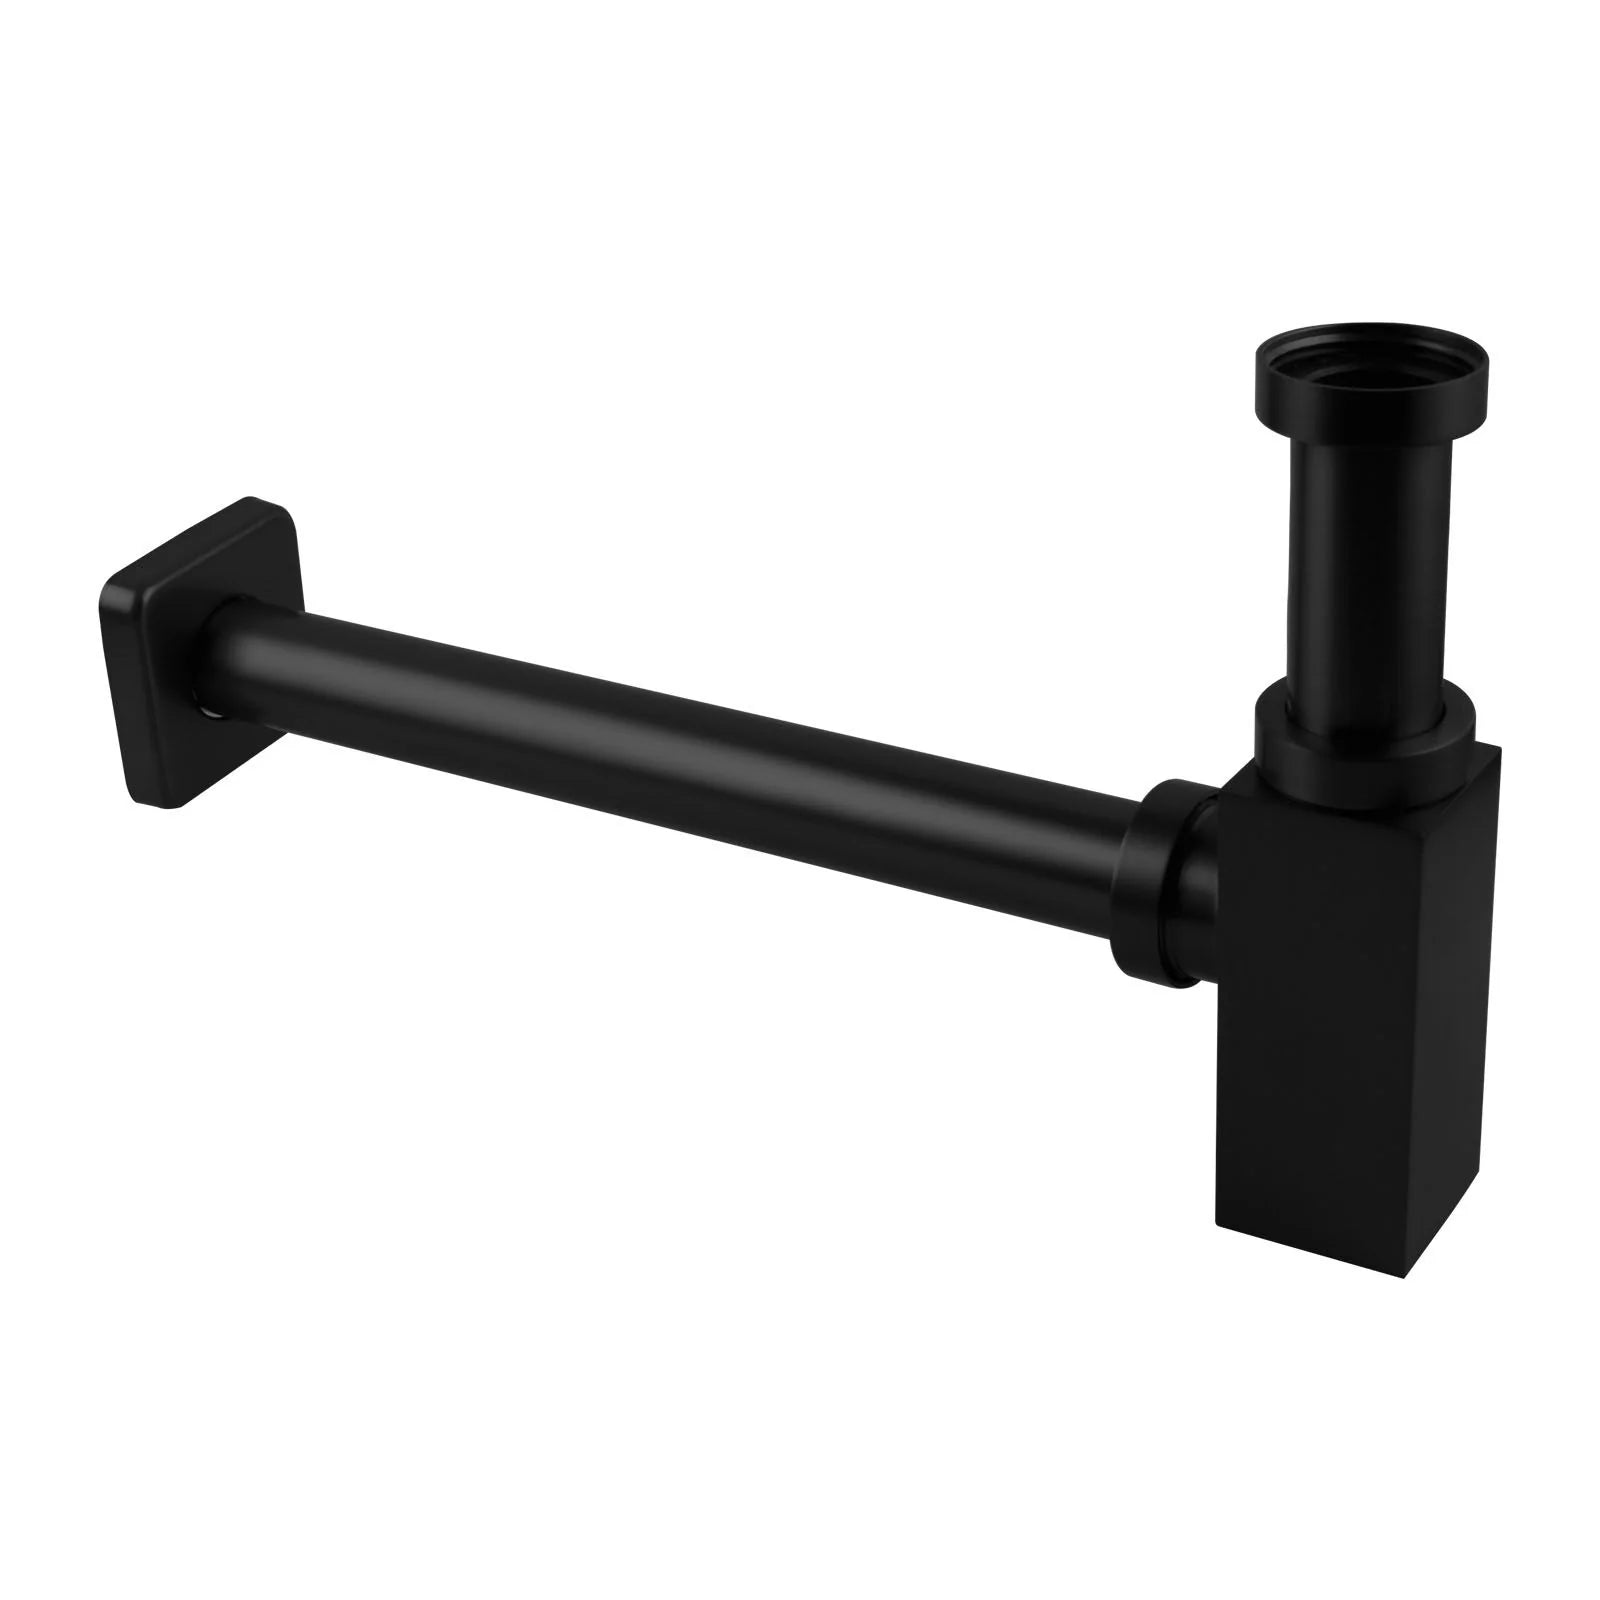 Basin Bottle Trap 32mm: Plumbing Essential for Sink Drainage-Matte black-OX001.BT